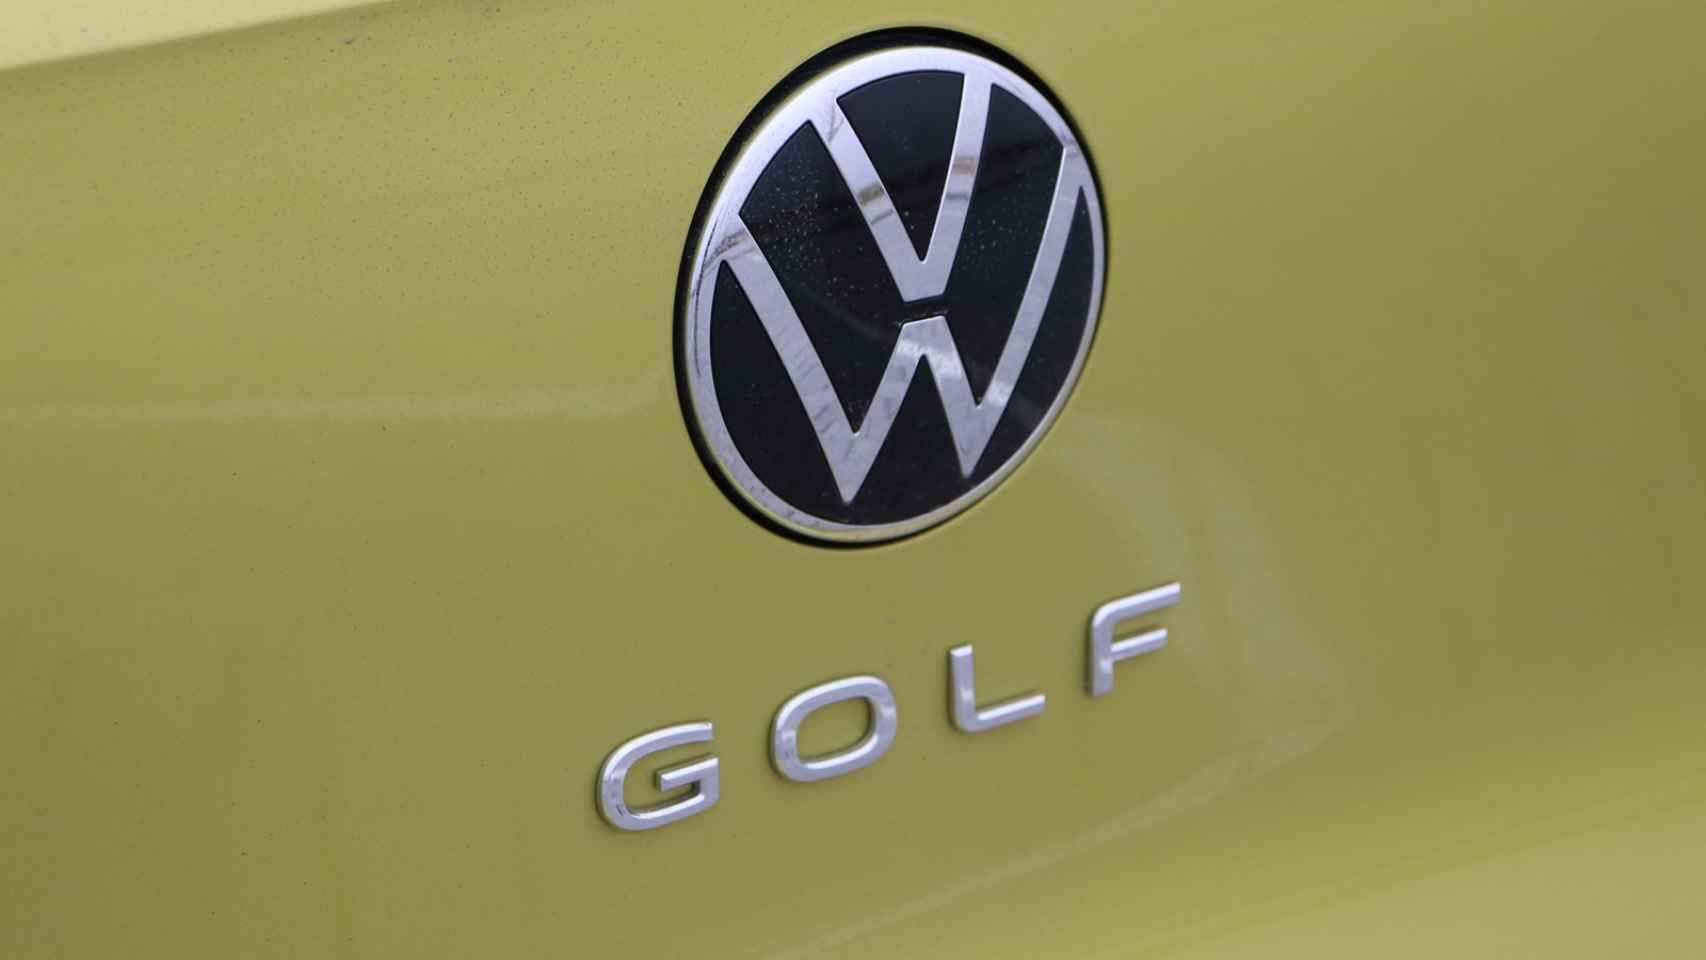 Imagen de la zaga del Volkswagen Golf.